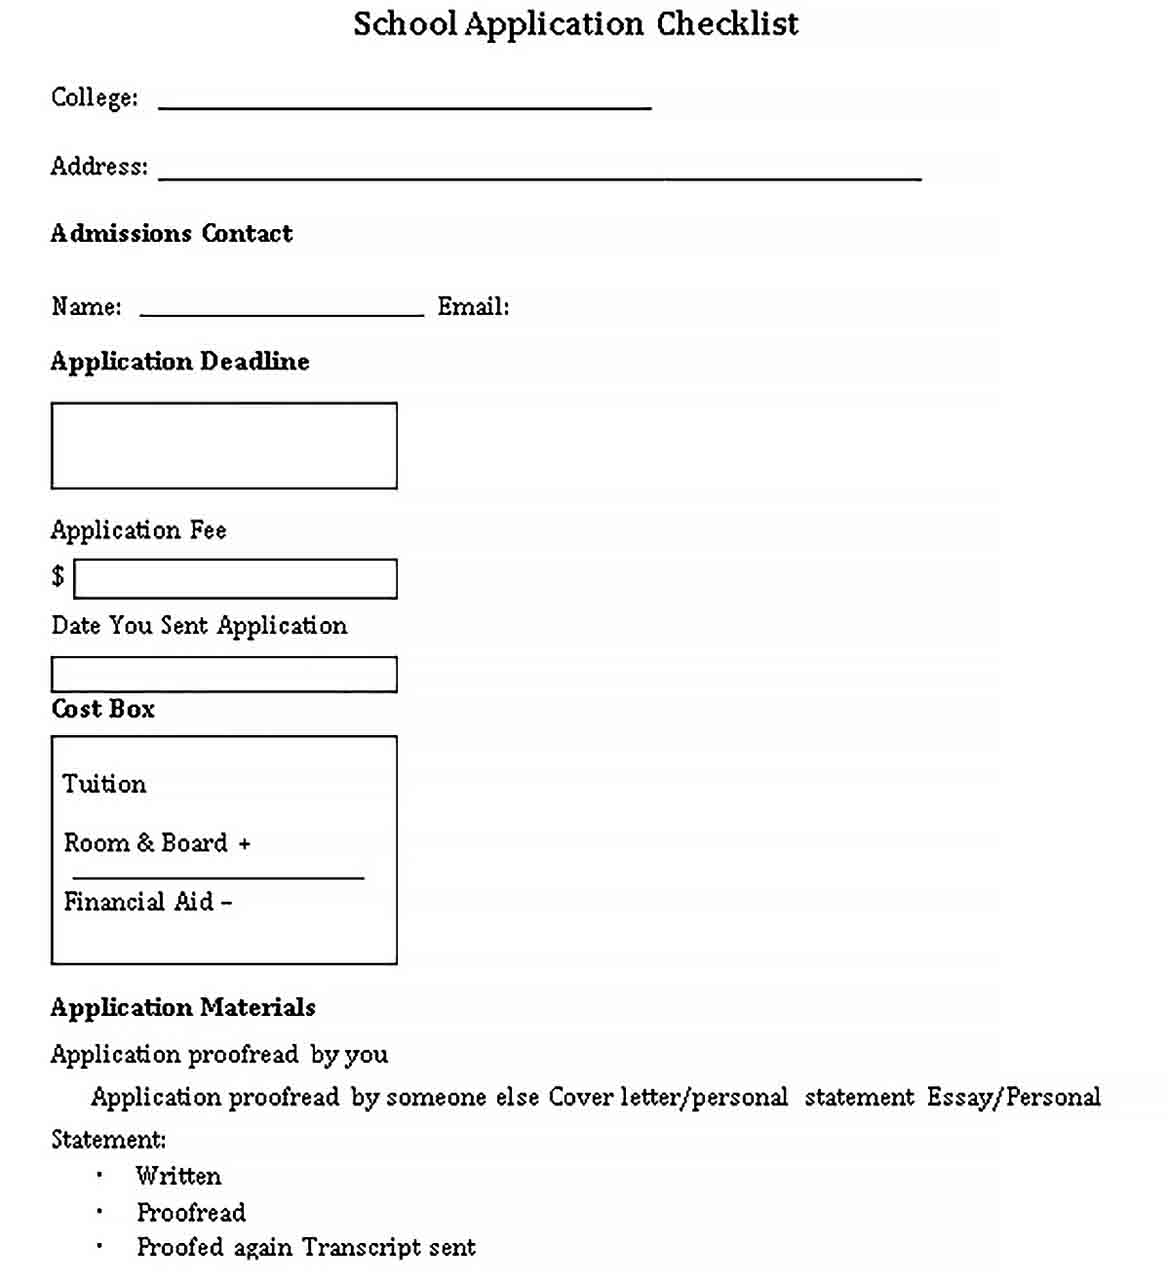 Application Checklists Template - bcjournal Regarding College Application Checklist Template